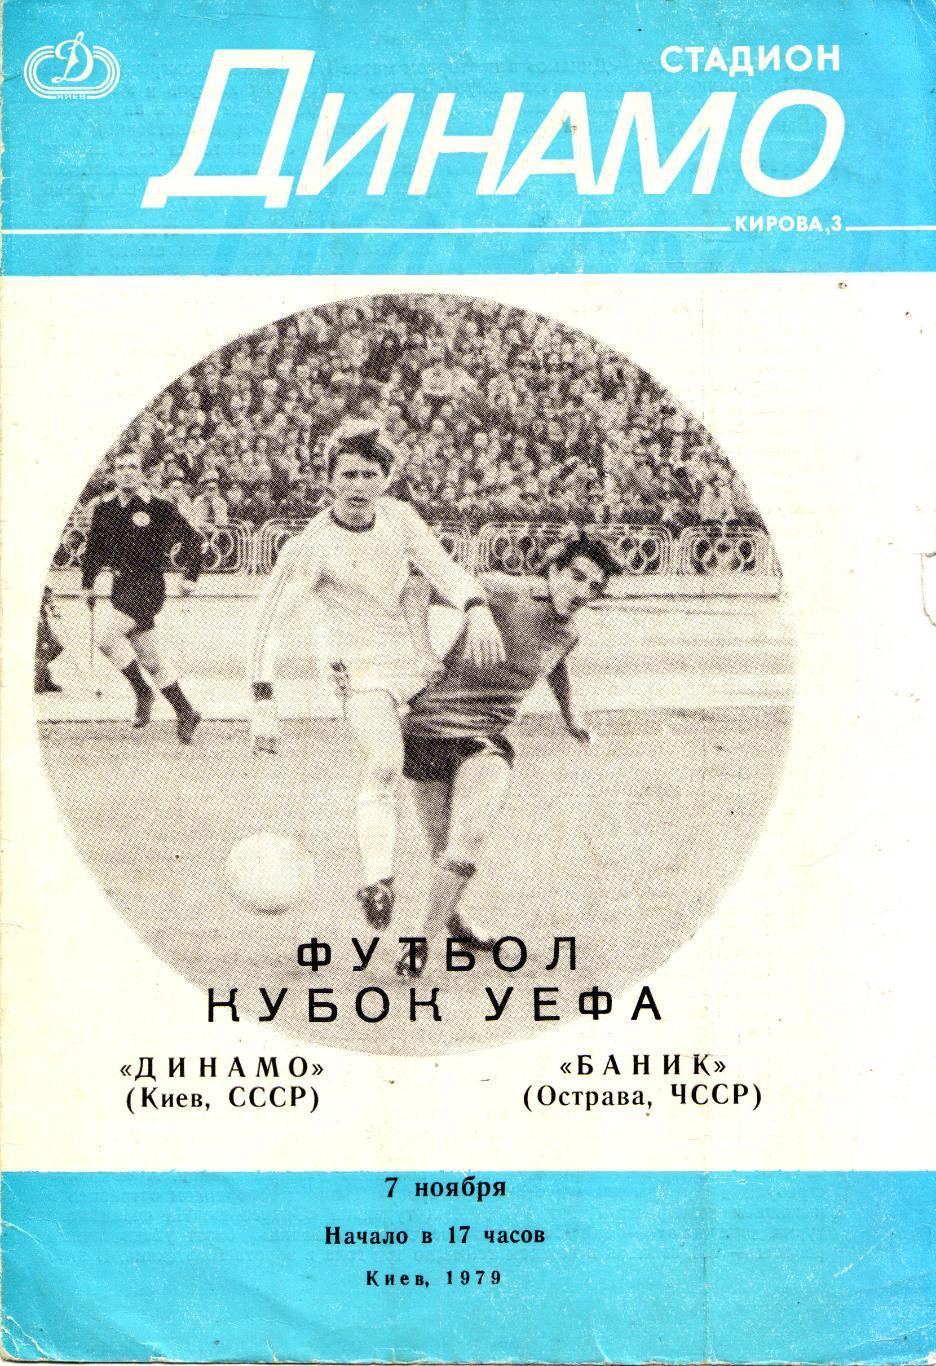 Динамо Киев - Баник Острава, ЧССР 07.11.1979